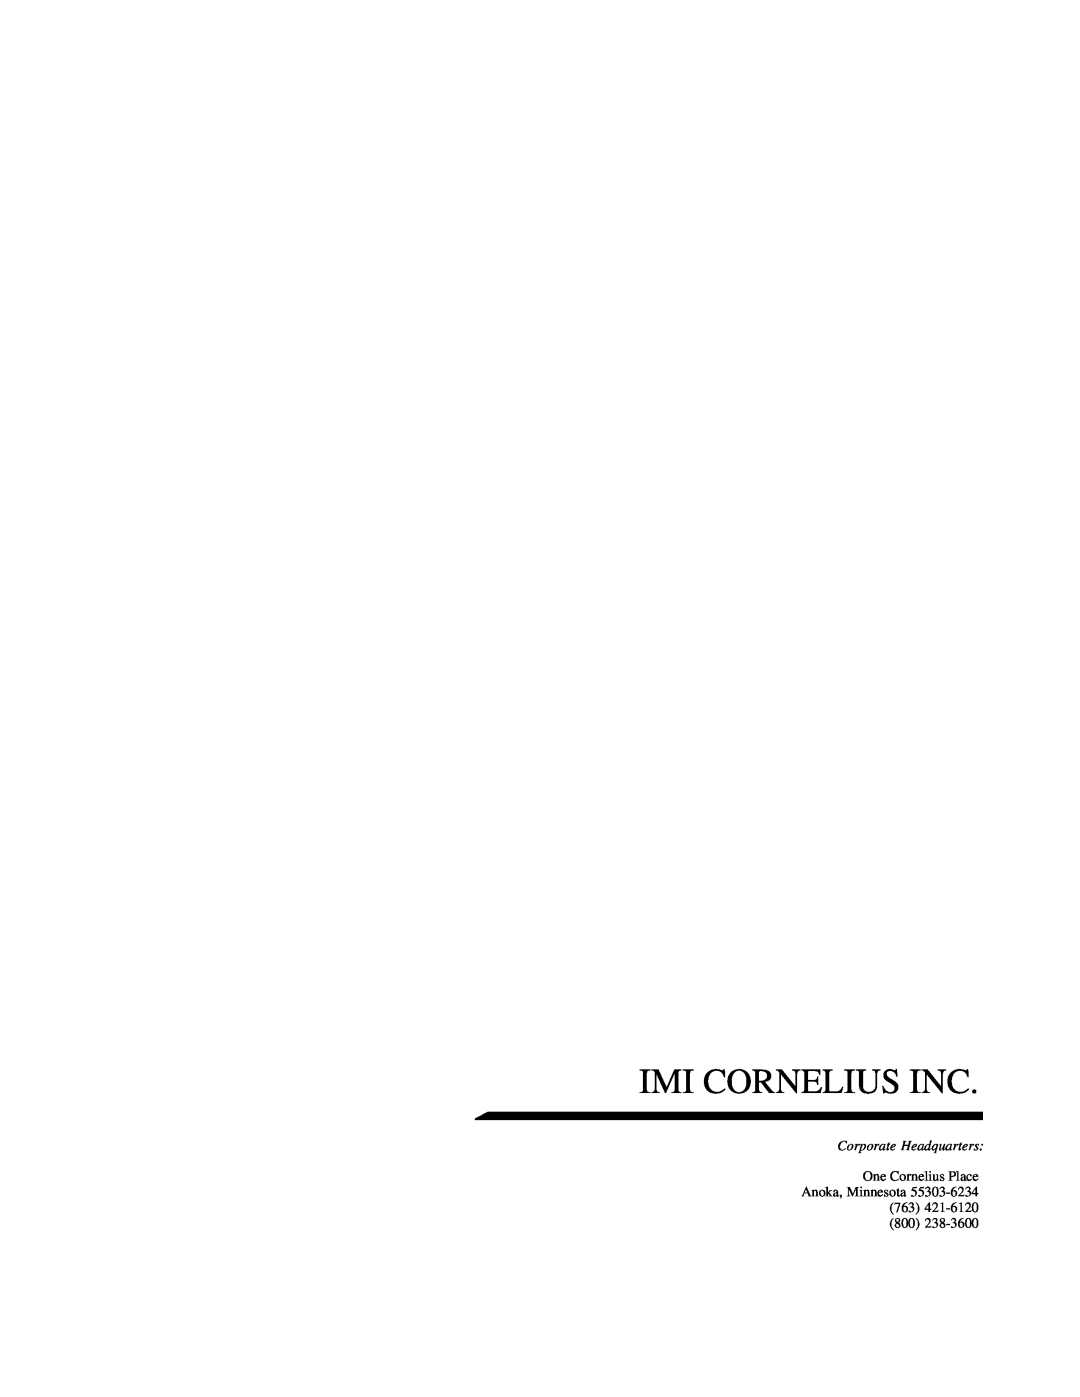 Cornelius 250 manual Imi Cornelius Inc, Corporate Headquarters, One Cornelius Place Anoka, Minnesota 